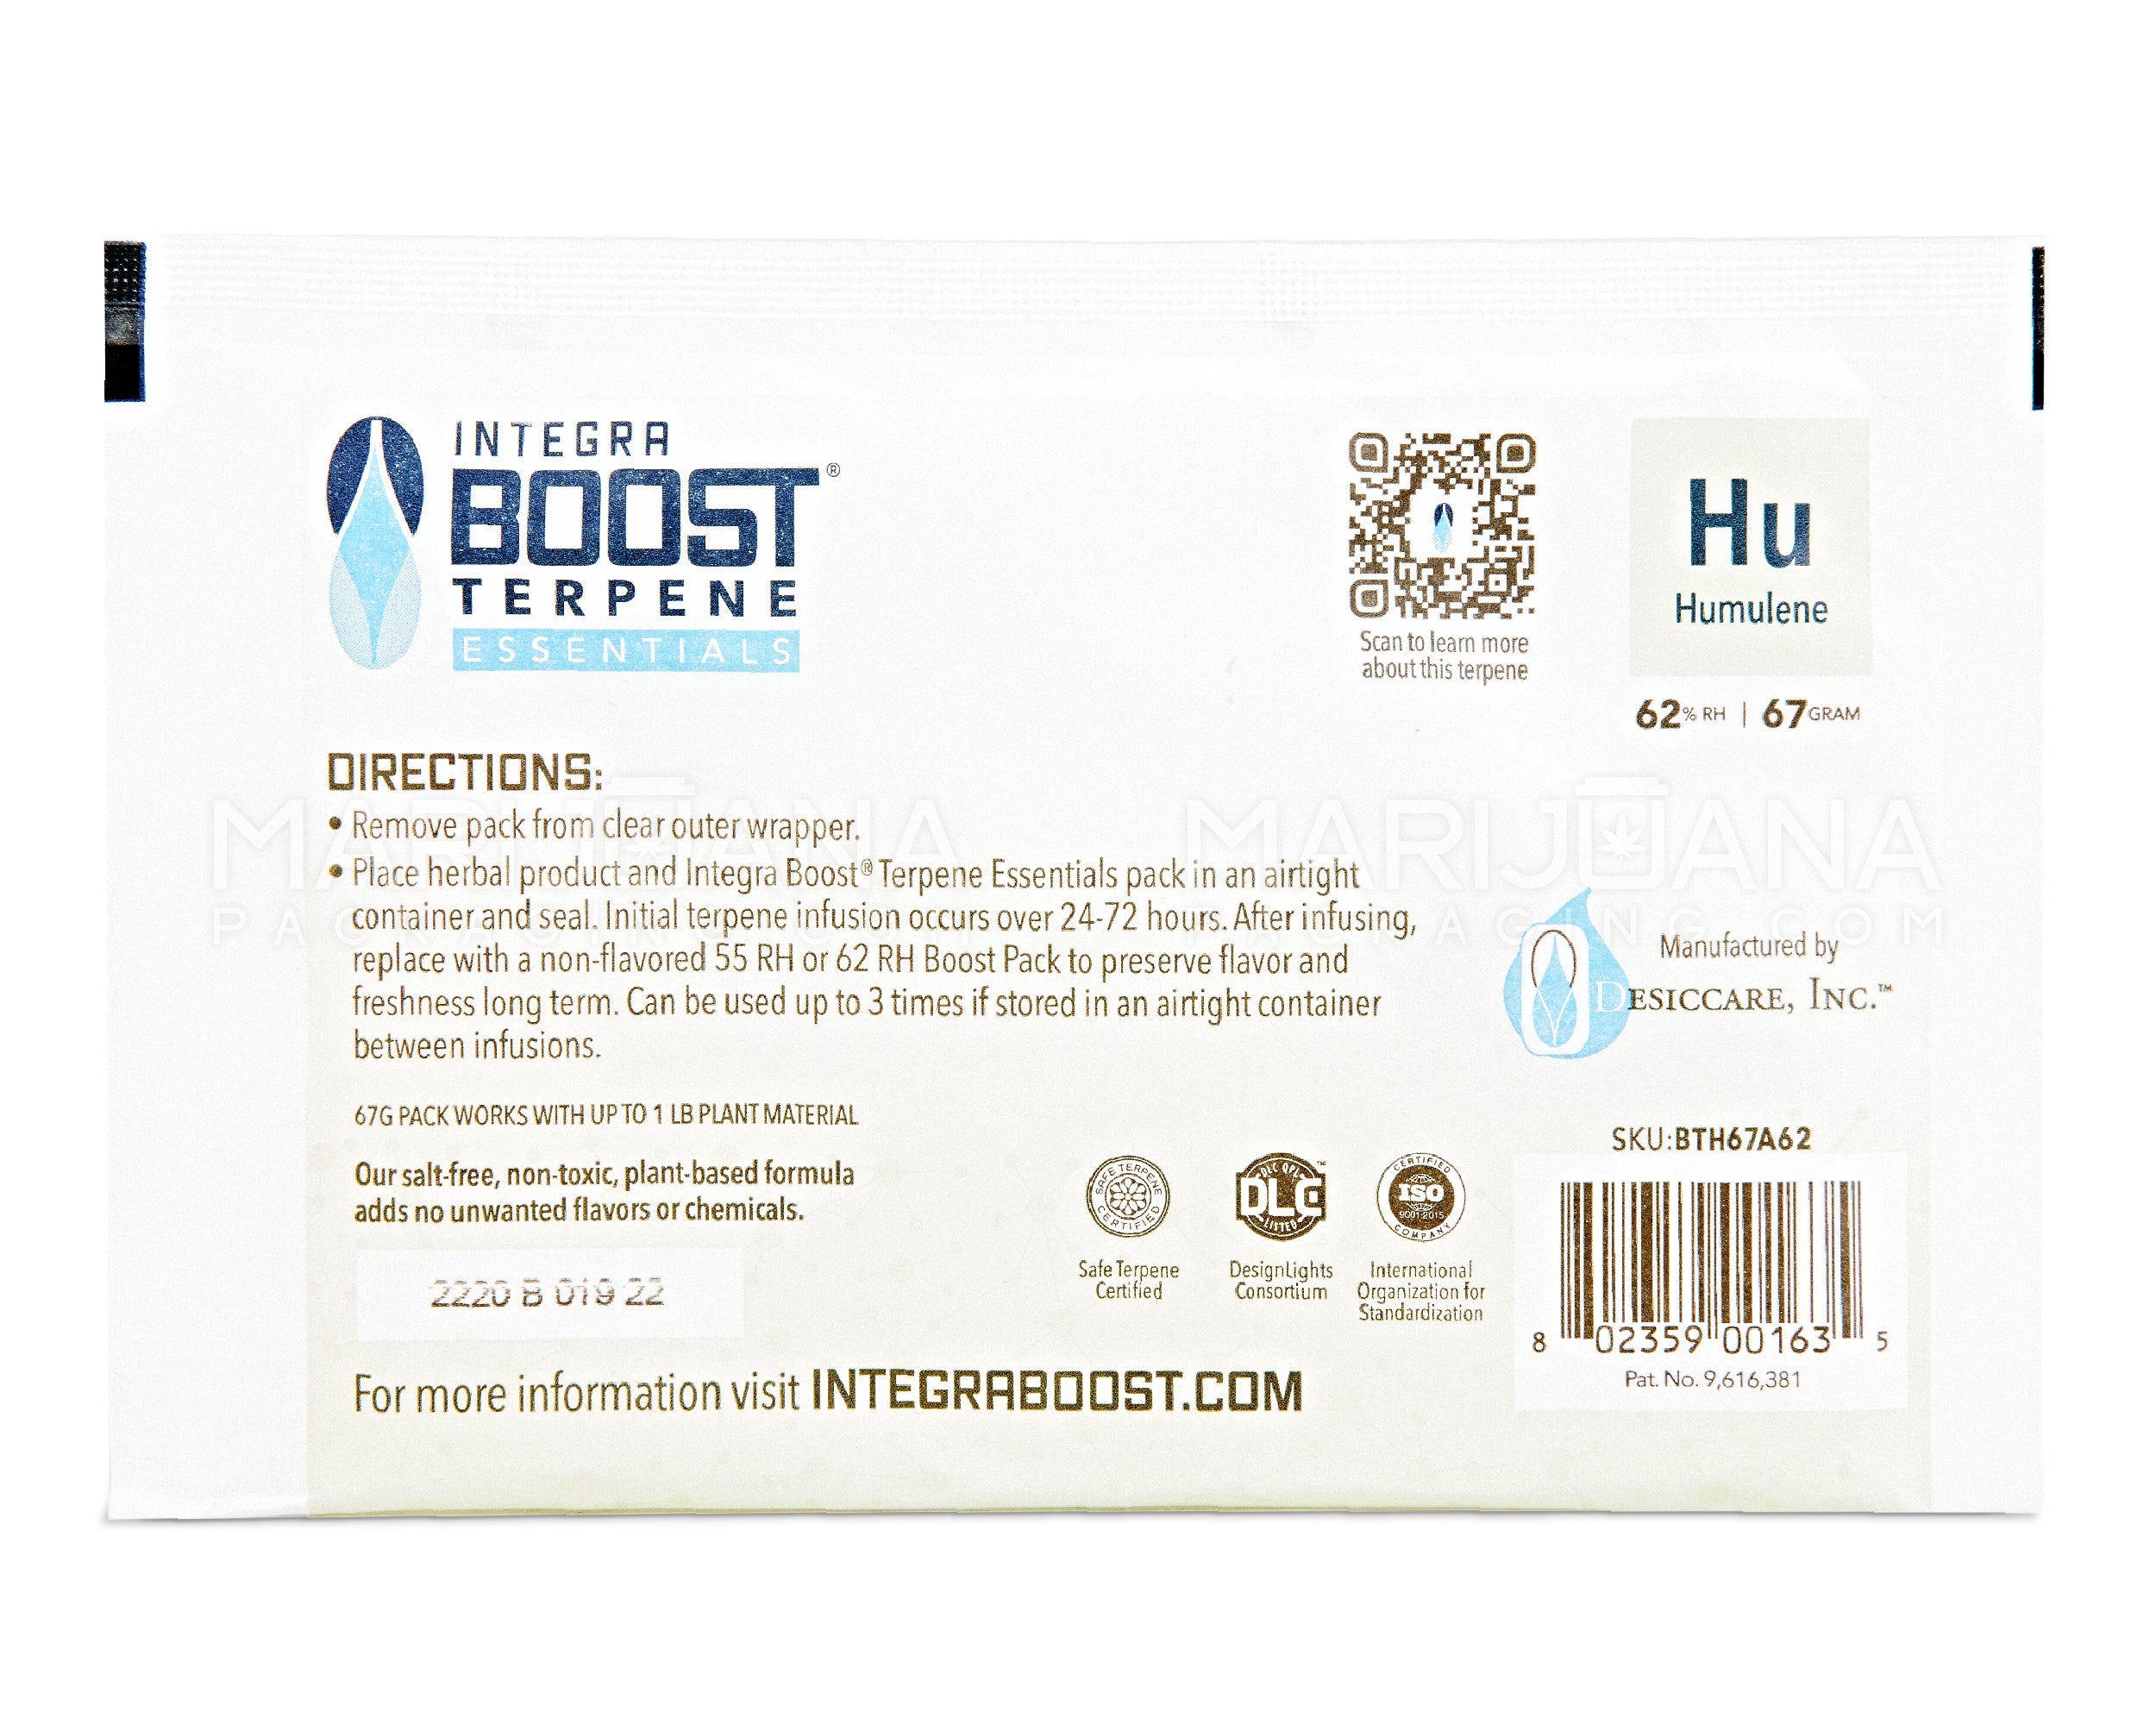 INTEGRA Boost Terpene Essentials Humulene Humidity Pack | 67 Grams - 62% | Sample - 2